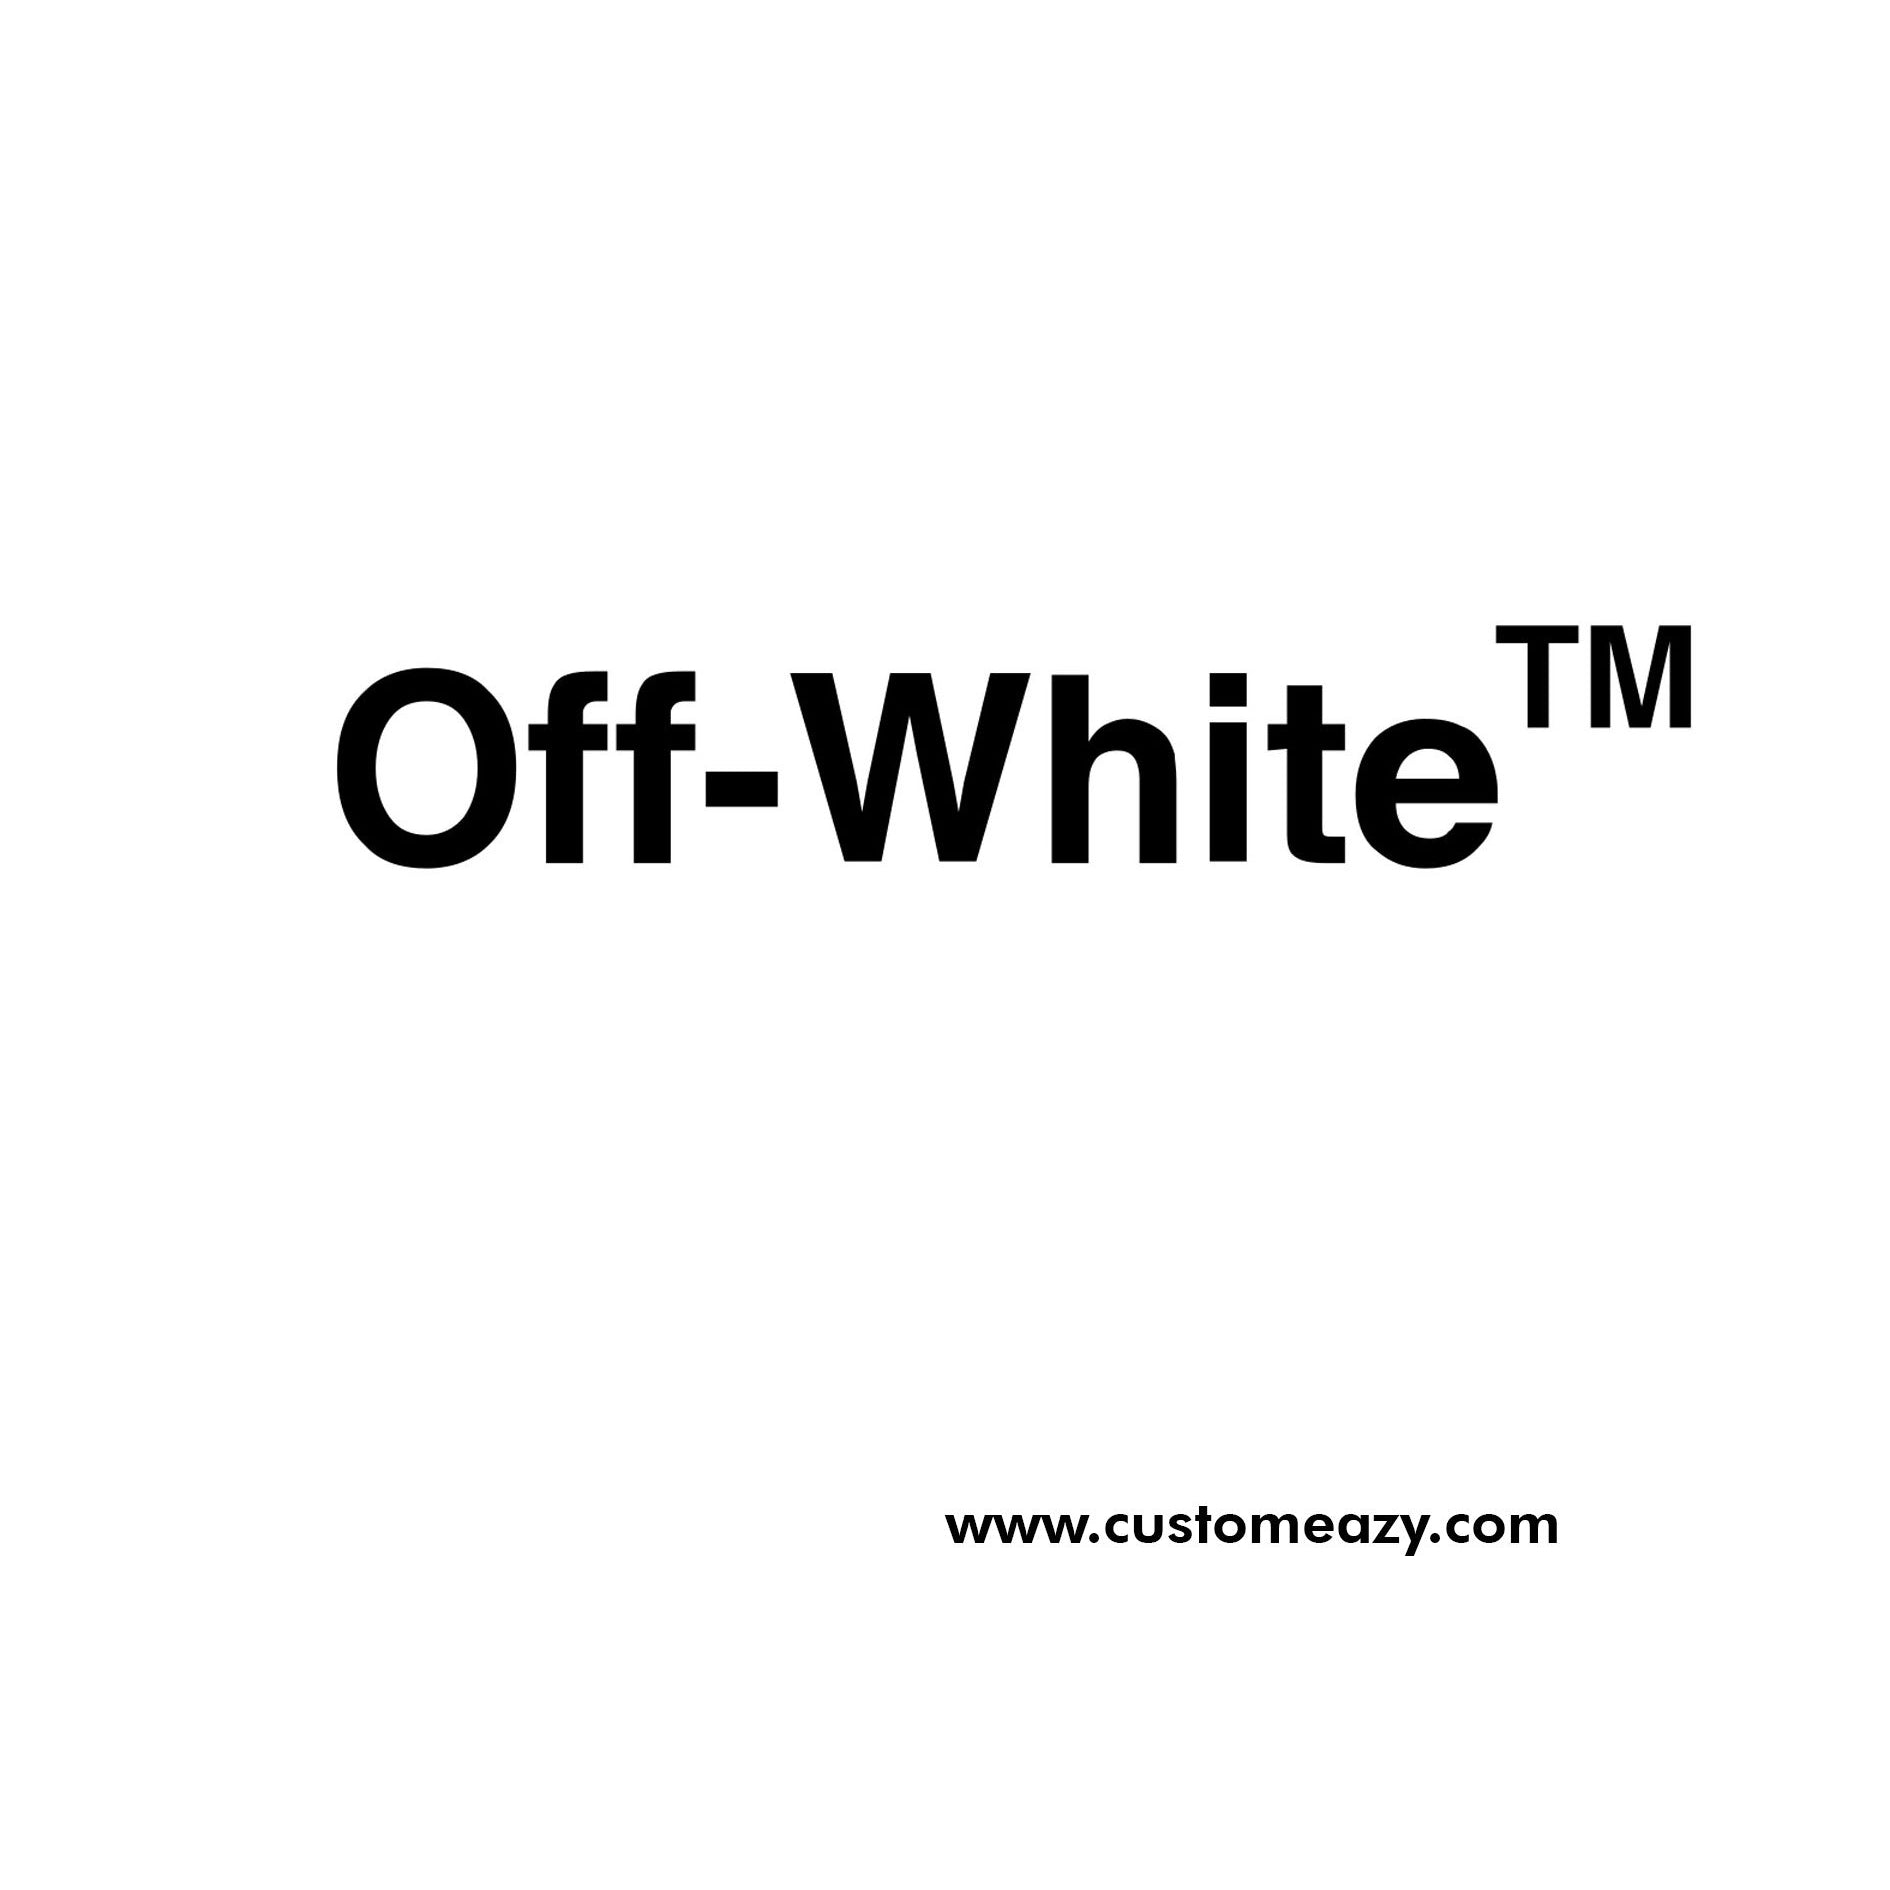 OFF Logo - Off-white